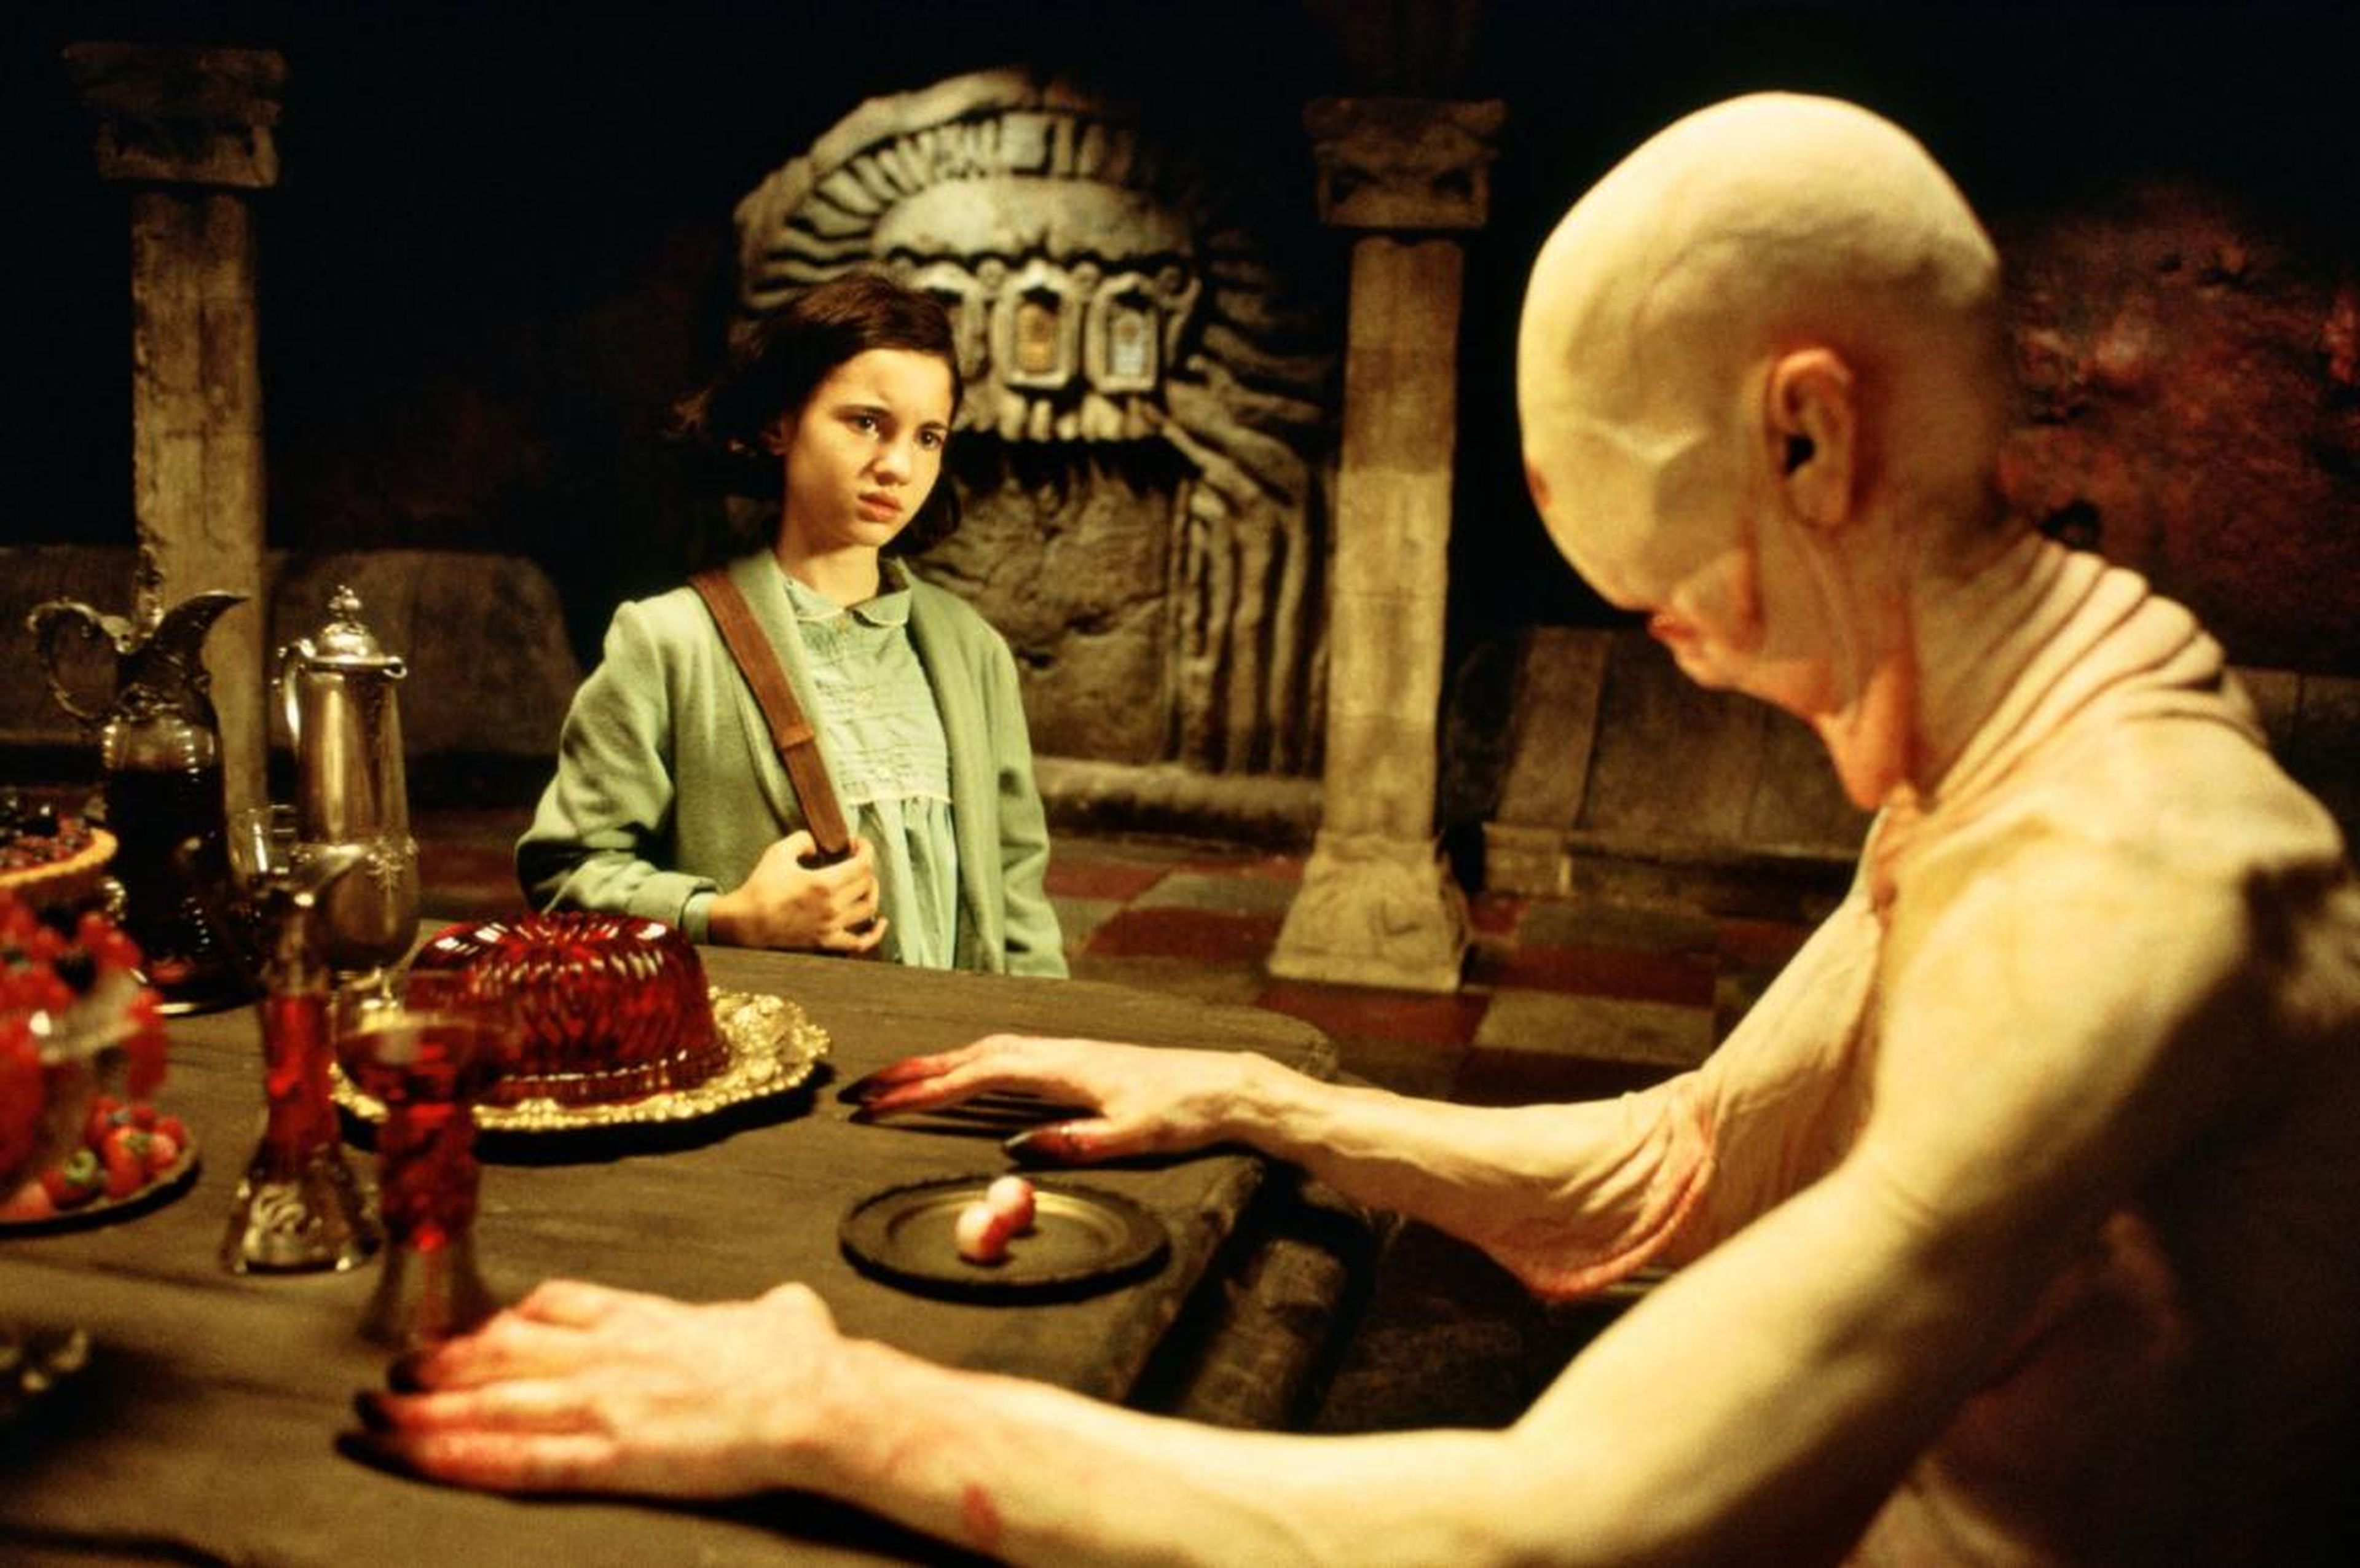 10. "Pan's Labyrinth" (2006)